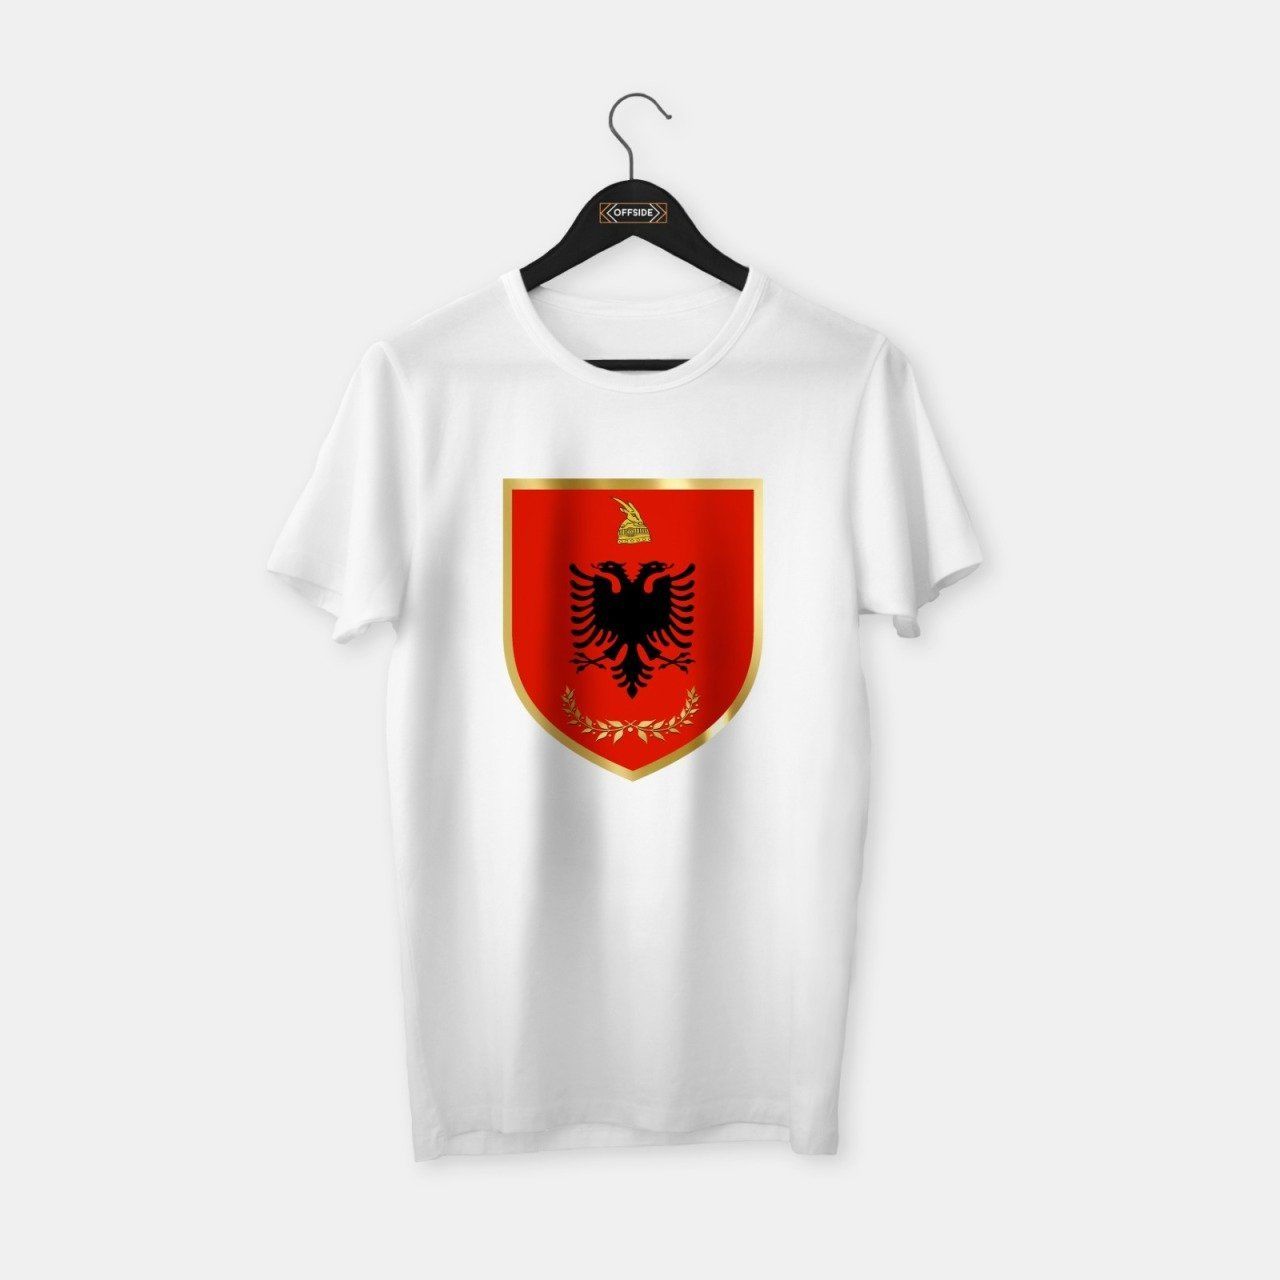 Arnavutluk (Albania) T-shirt